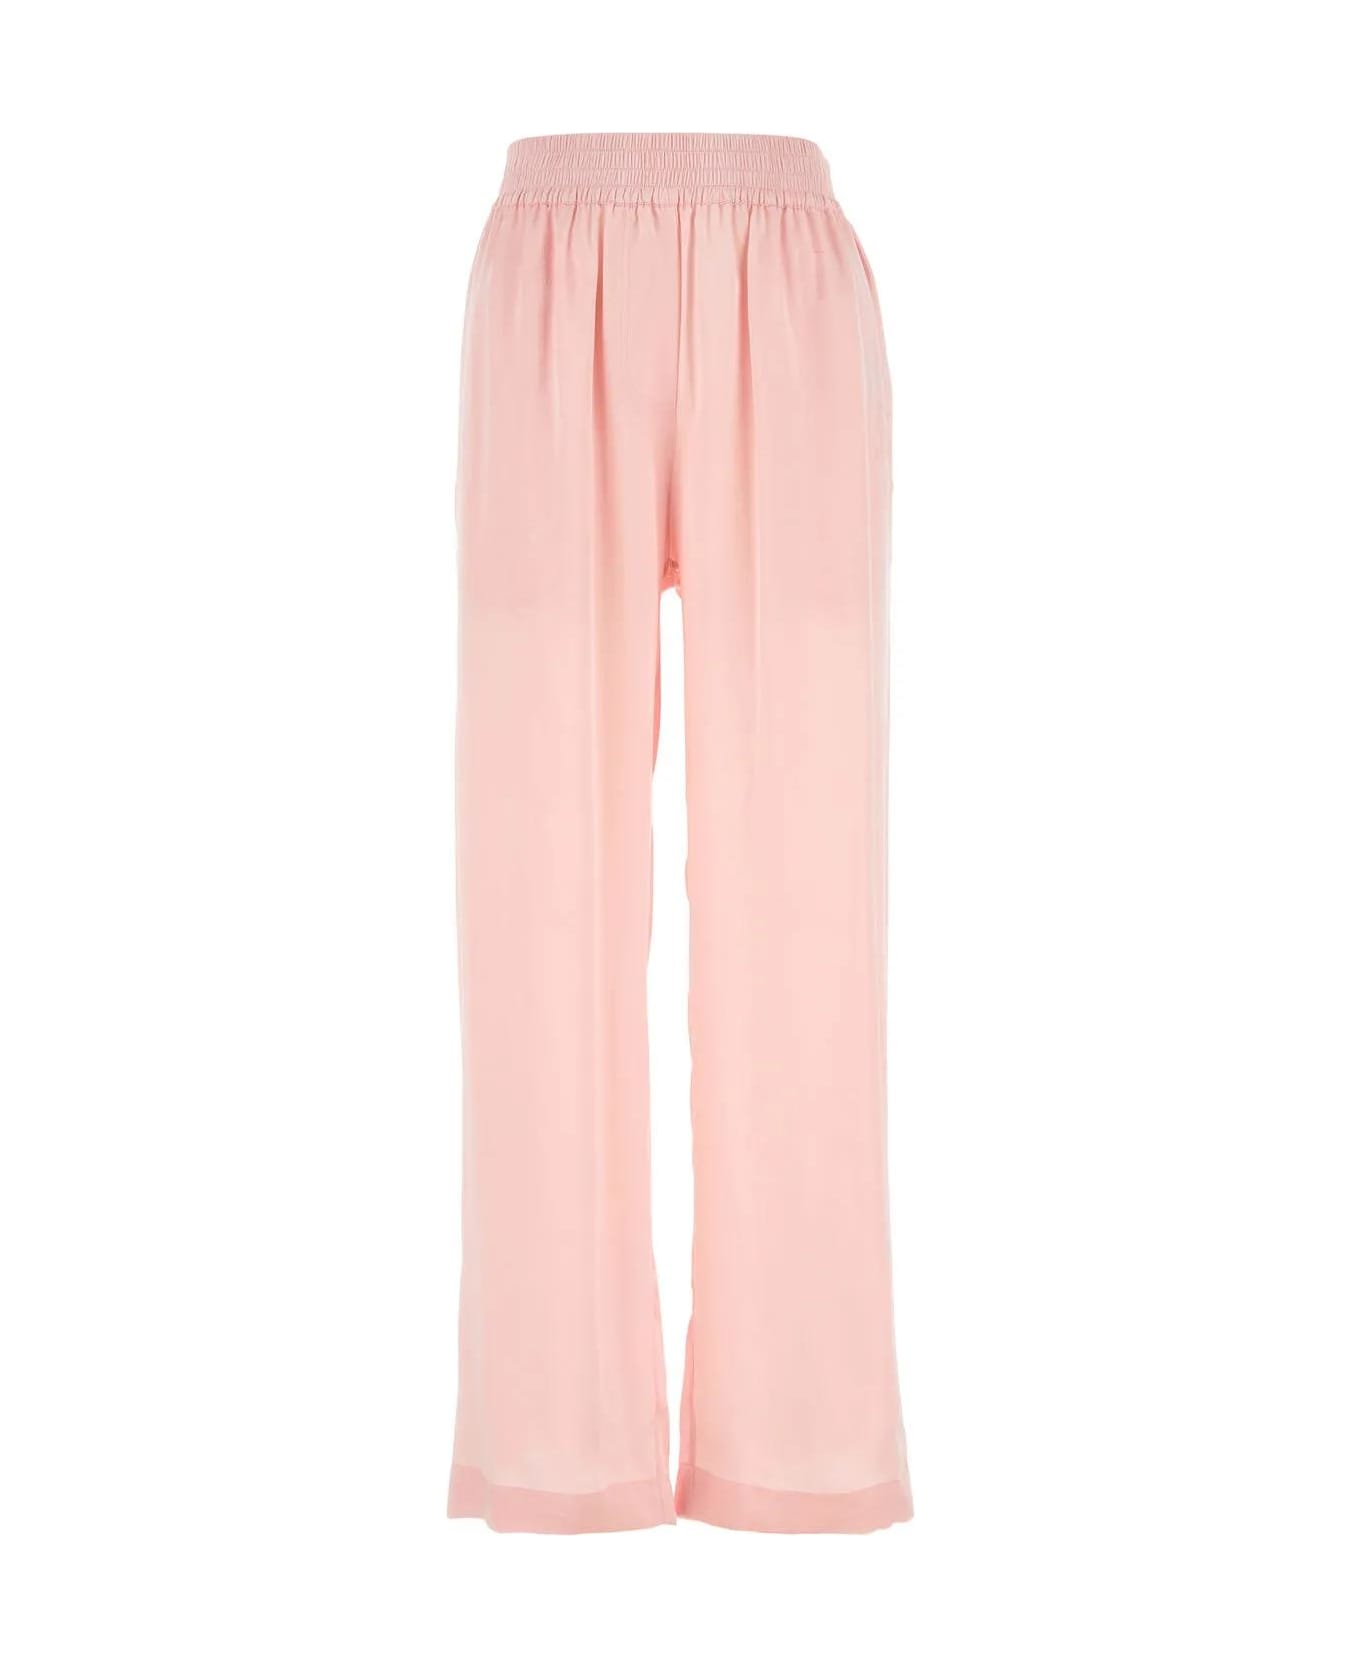 Burberry Pastel Pink Satin Pyjama Pant - Pink ボトムス